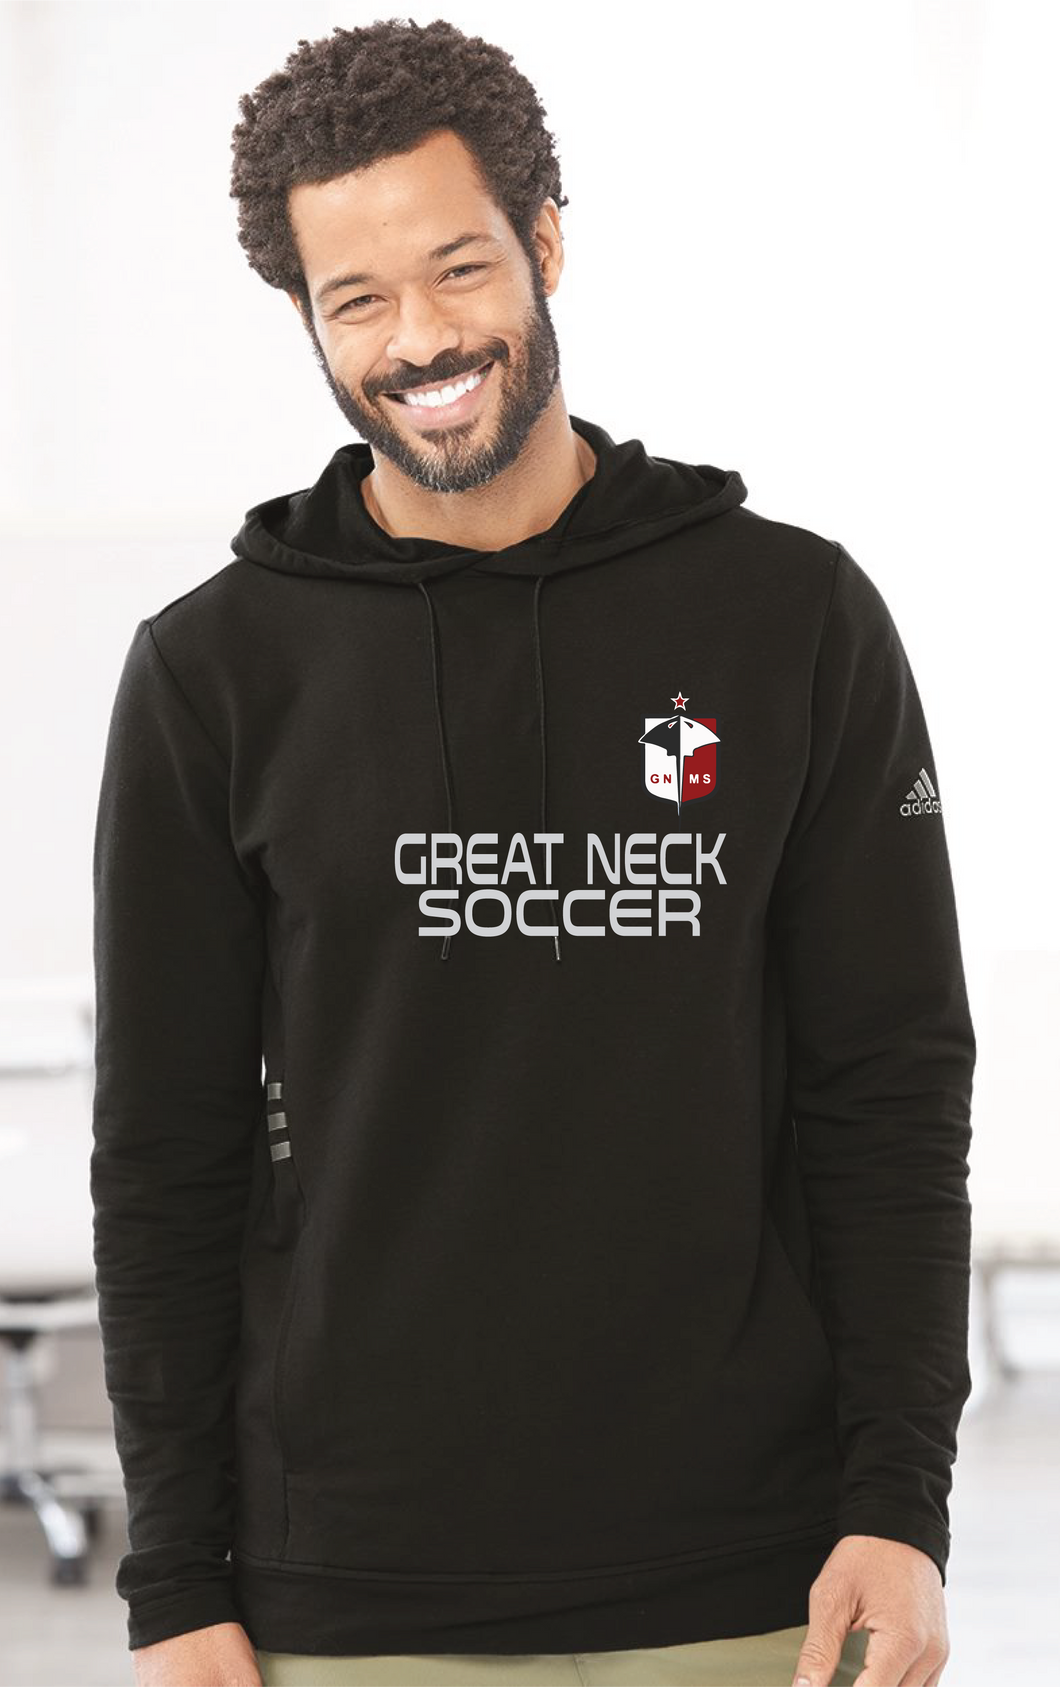 Adidas - Lightweight Hooded Sweatshirt / Black / Great Neck Soccer - Fidgety